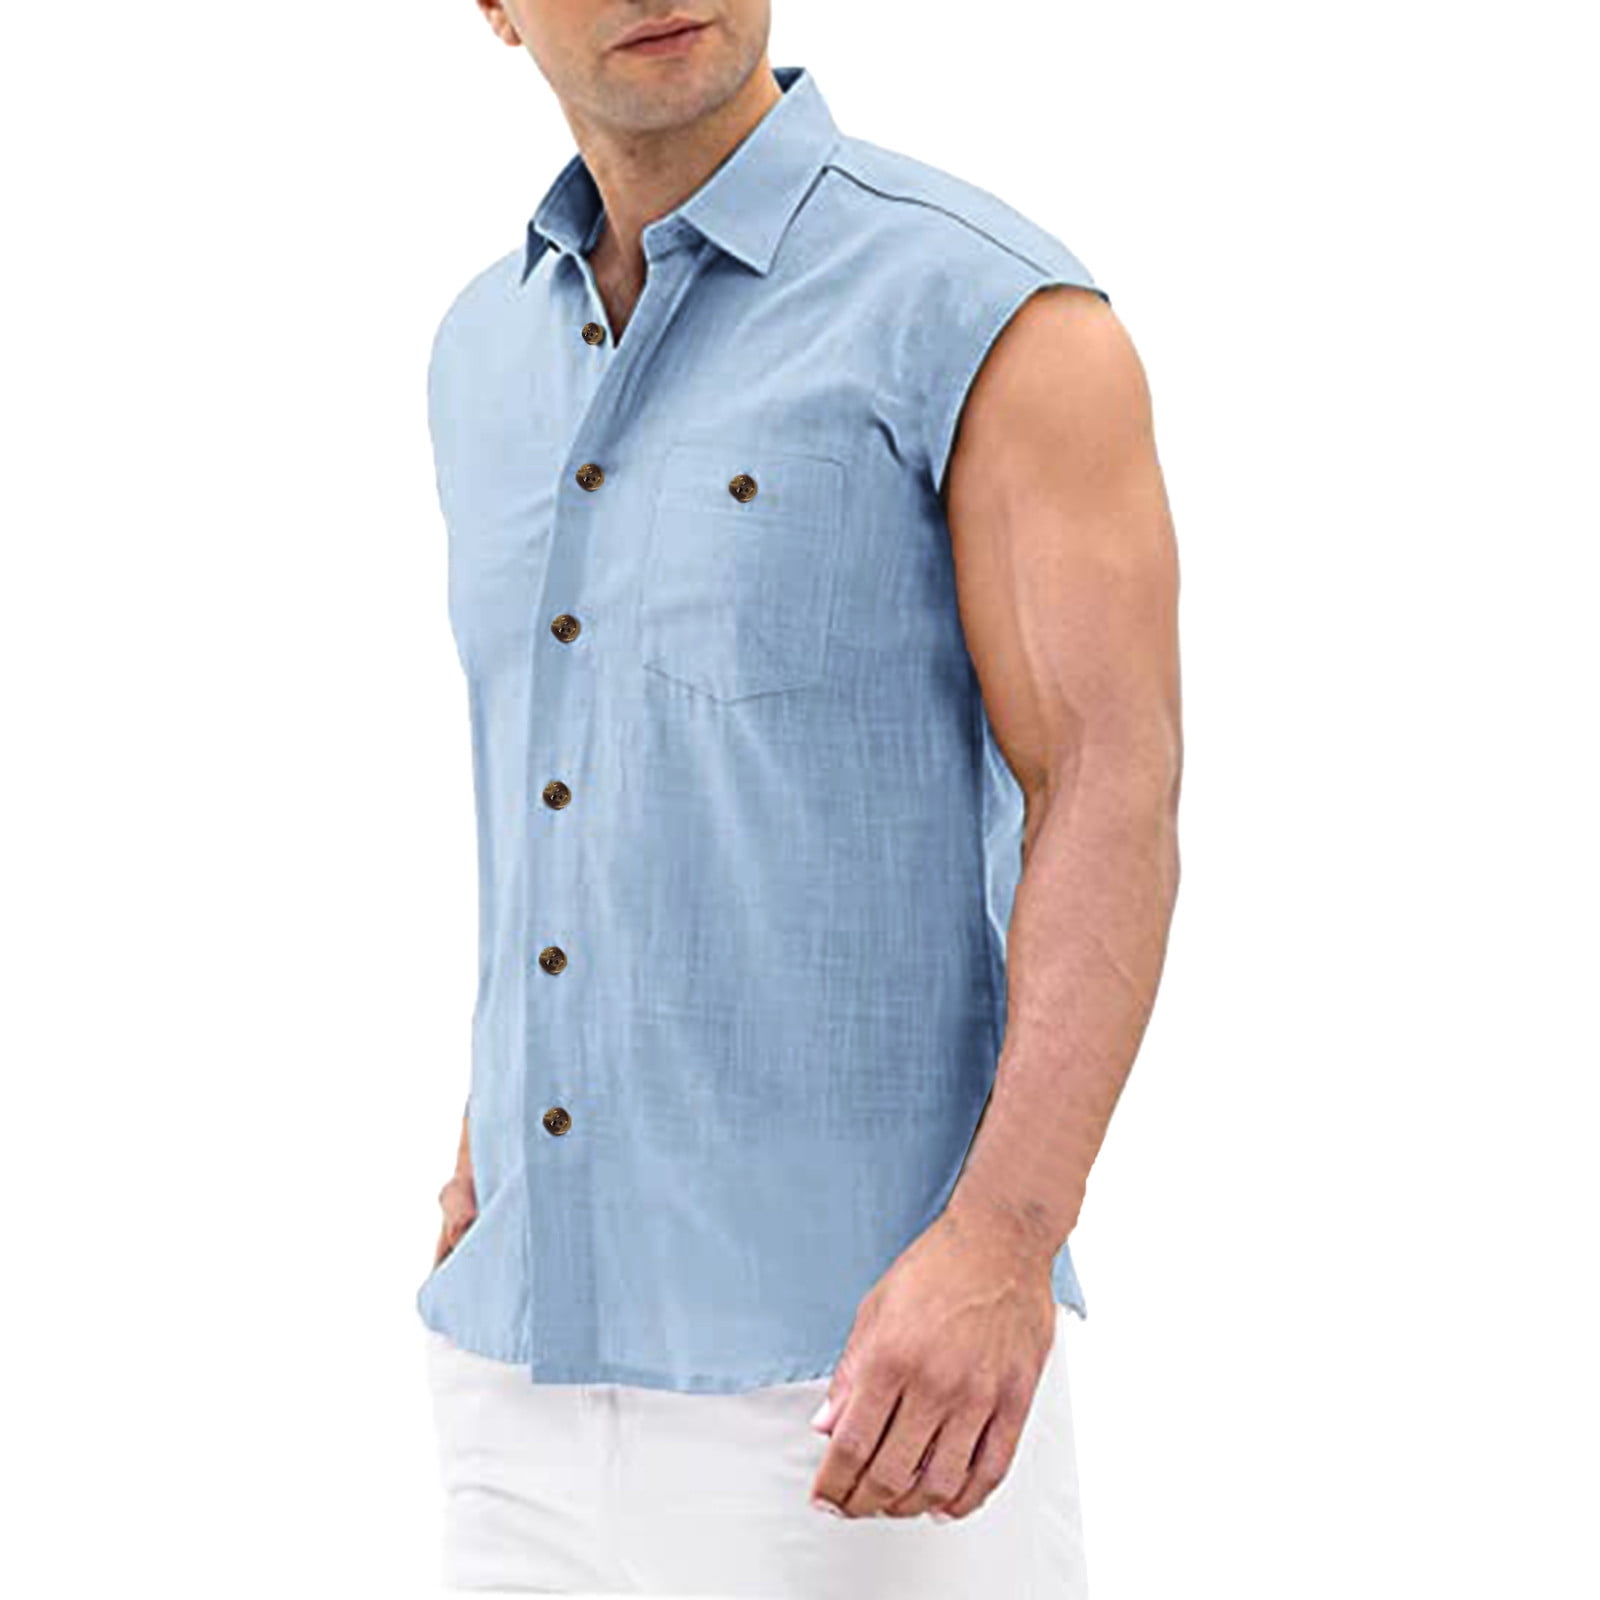 Huk Fishing Shirts For Men Men's Summer Cotton Linen Solid Color Casual  Sleeveless Shirt Workout Shirts For Men,Light blue,3XL 